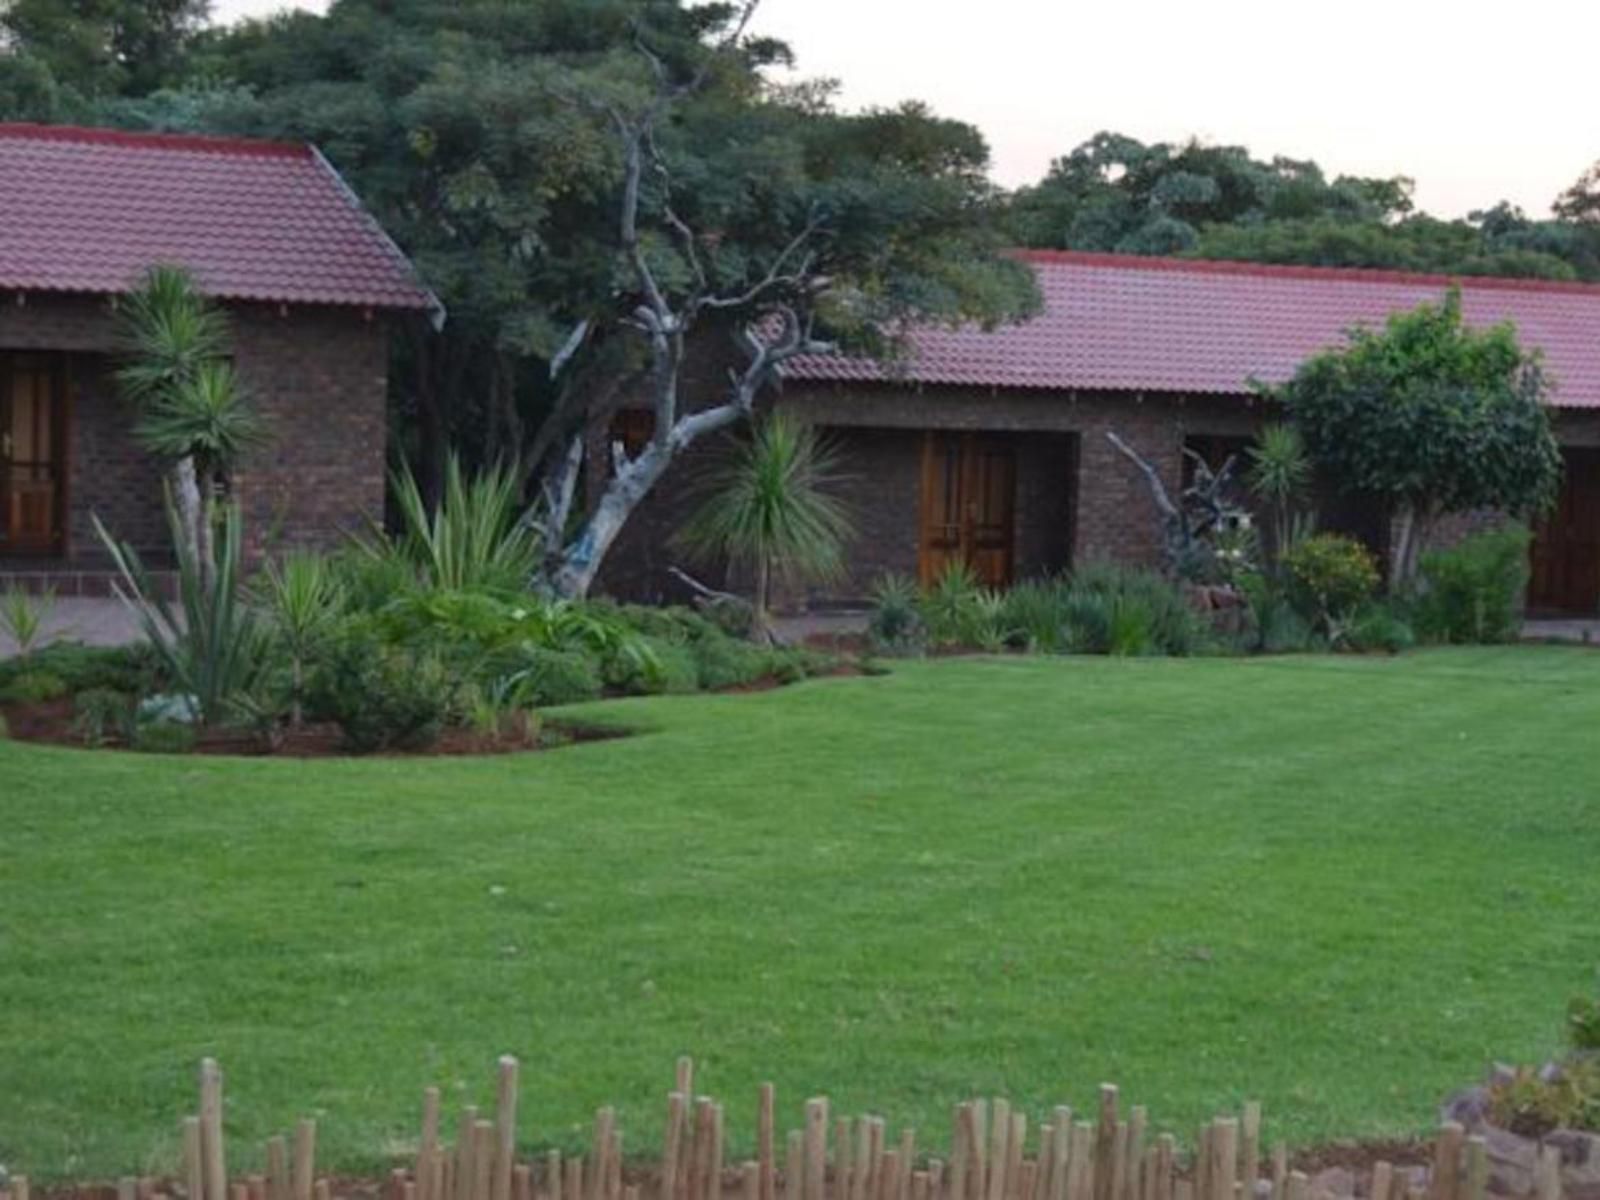 Mon Repos Guest Farm Bela Bela Warmbaths Limpopo Province South Africa House, Building, Architecture, Palm Tree, Plant, Nature, Wood, Garden